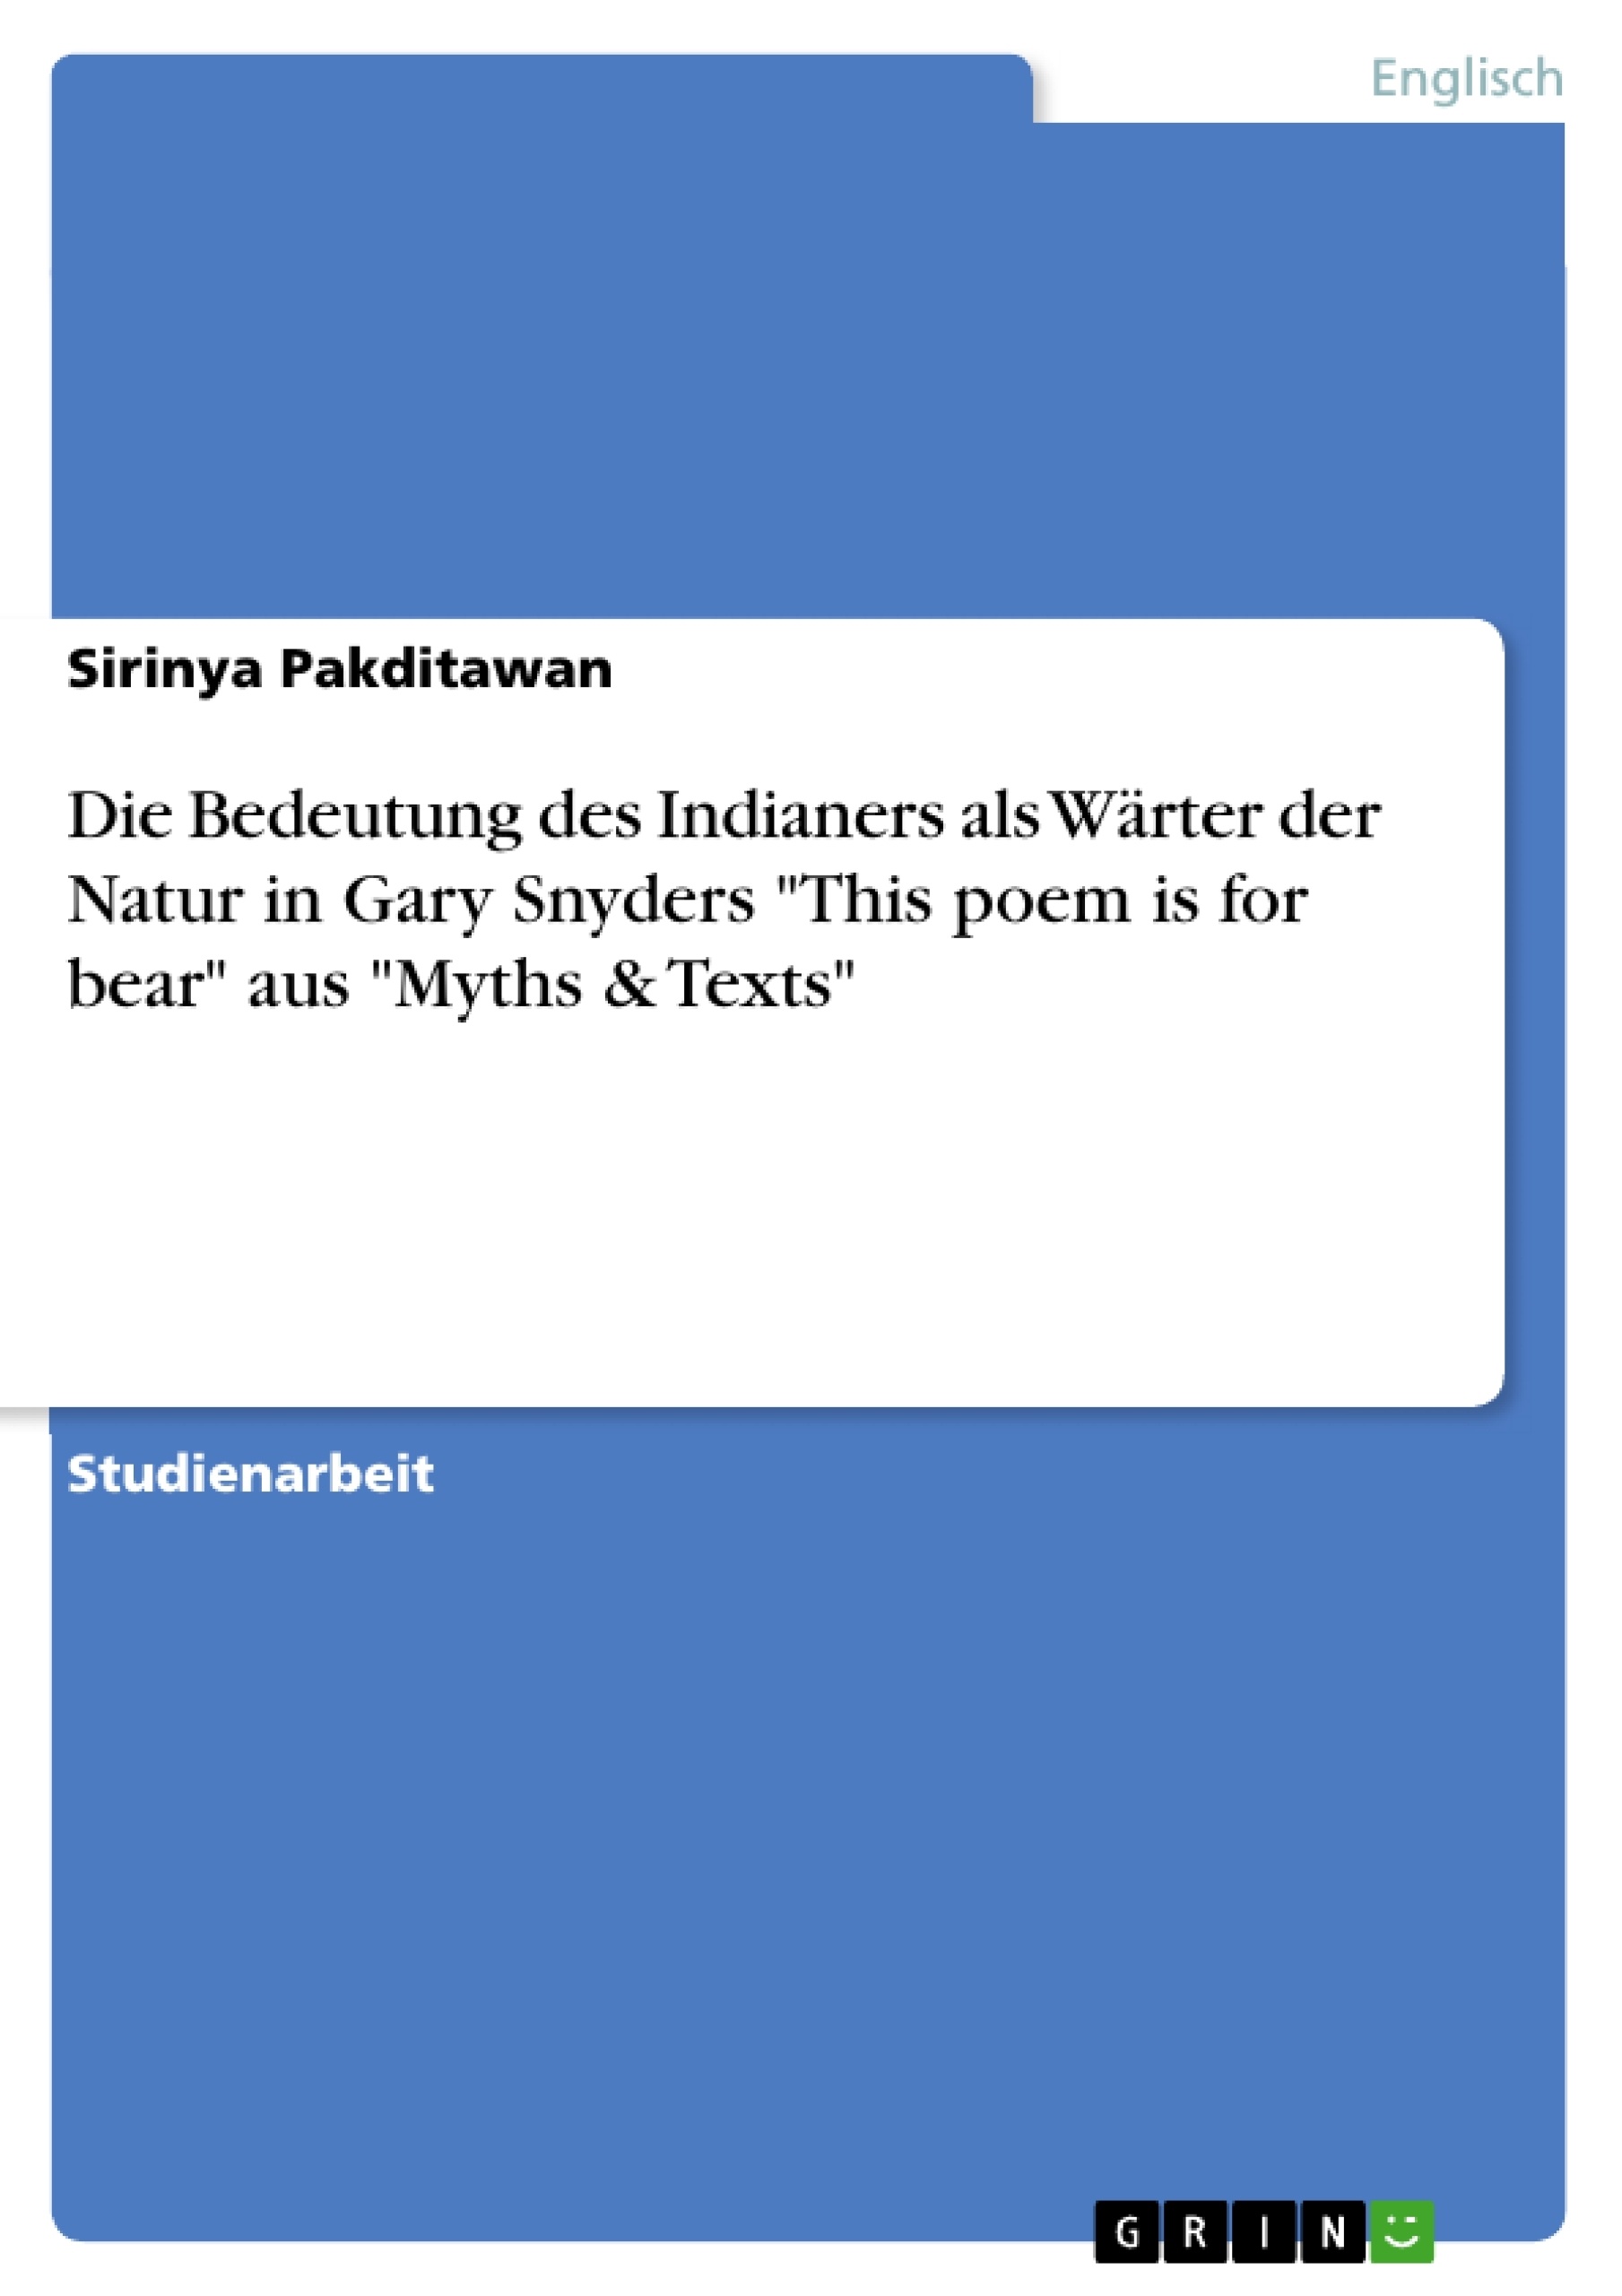 Title: Die Bedeutung des Indianers als Wärter der Natur in Gary Snyders "This poem is for bear" aus "Myths & Texts"